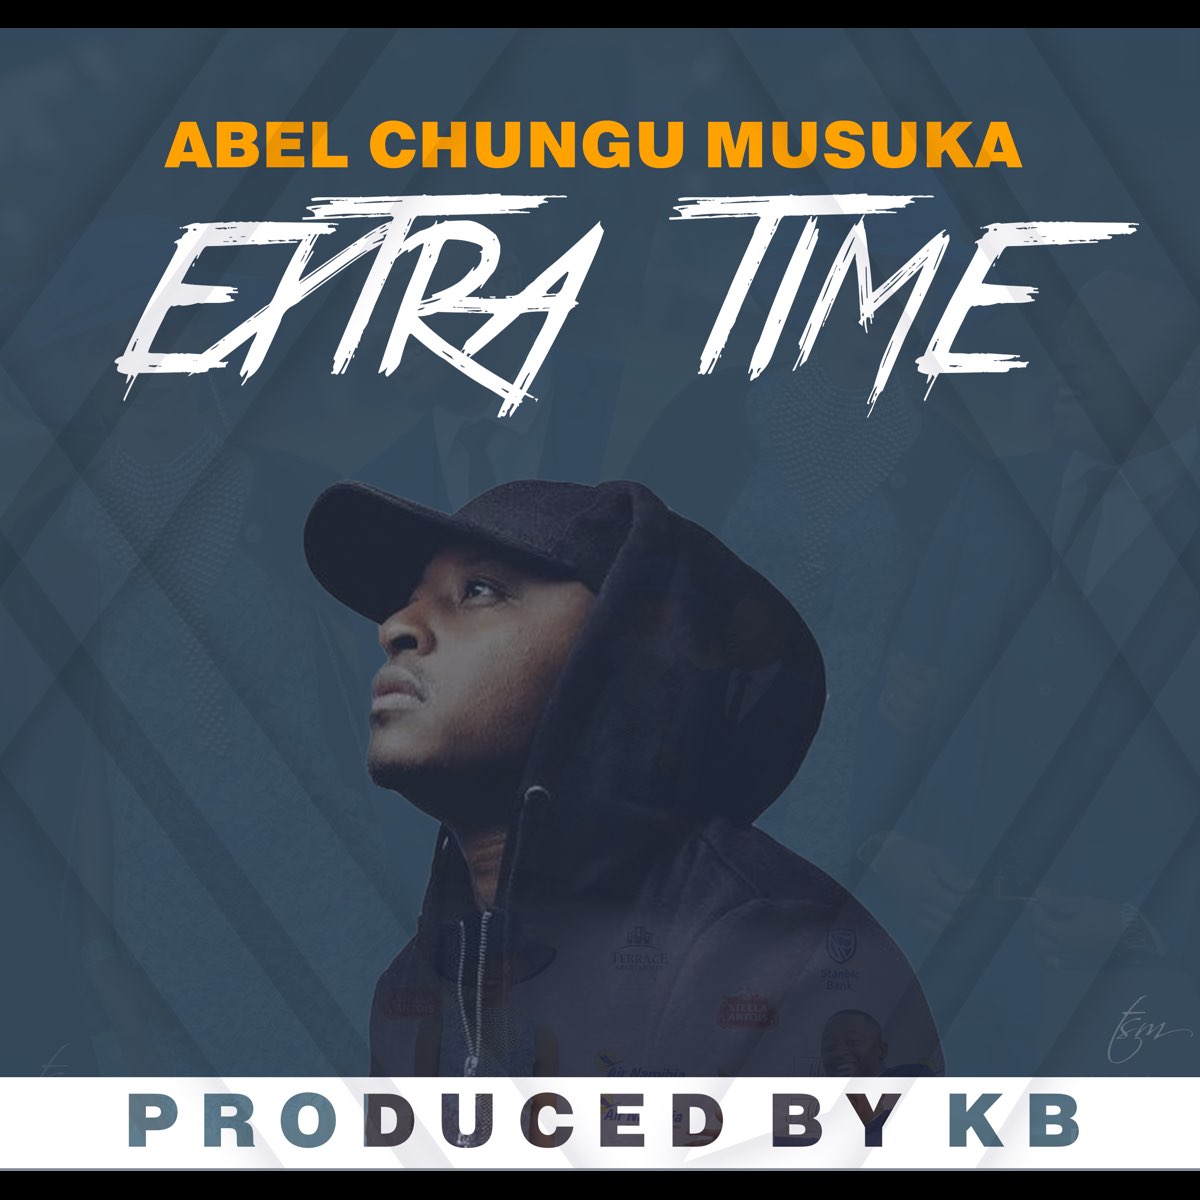 Extra Time - Single“ von Abel Chungu Musuka bei Apple Music